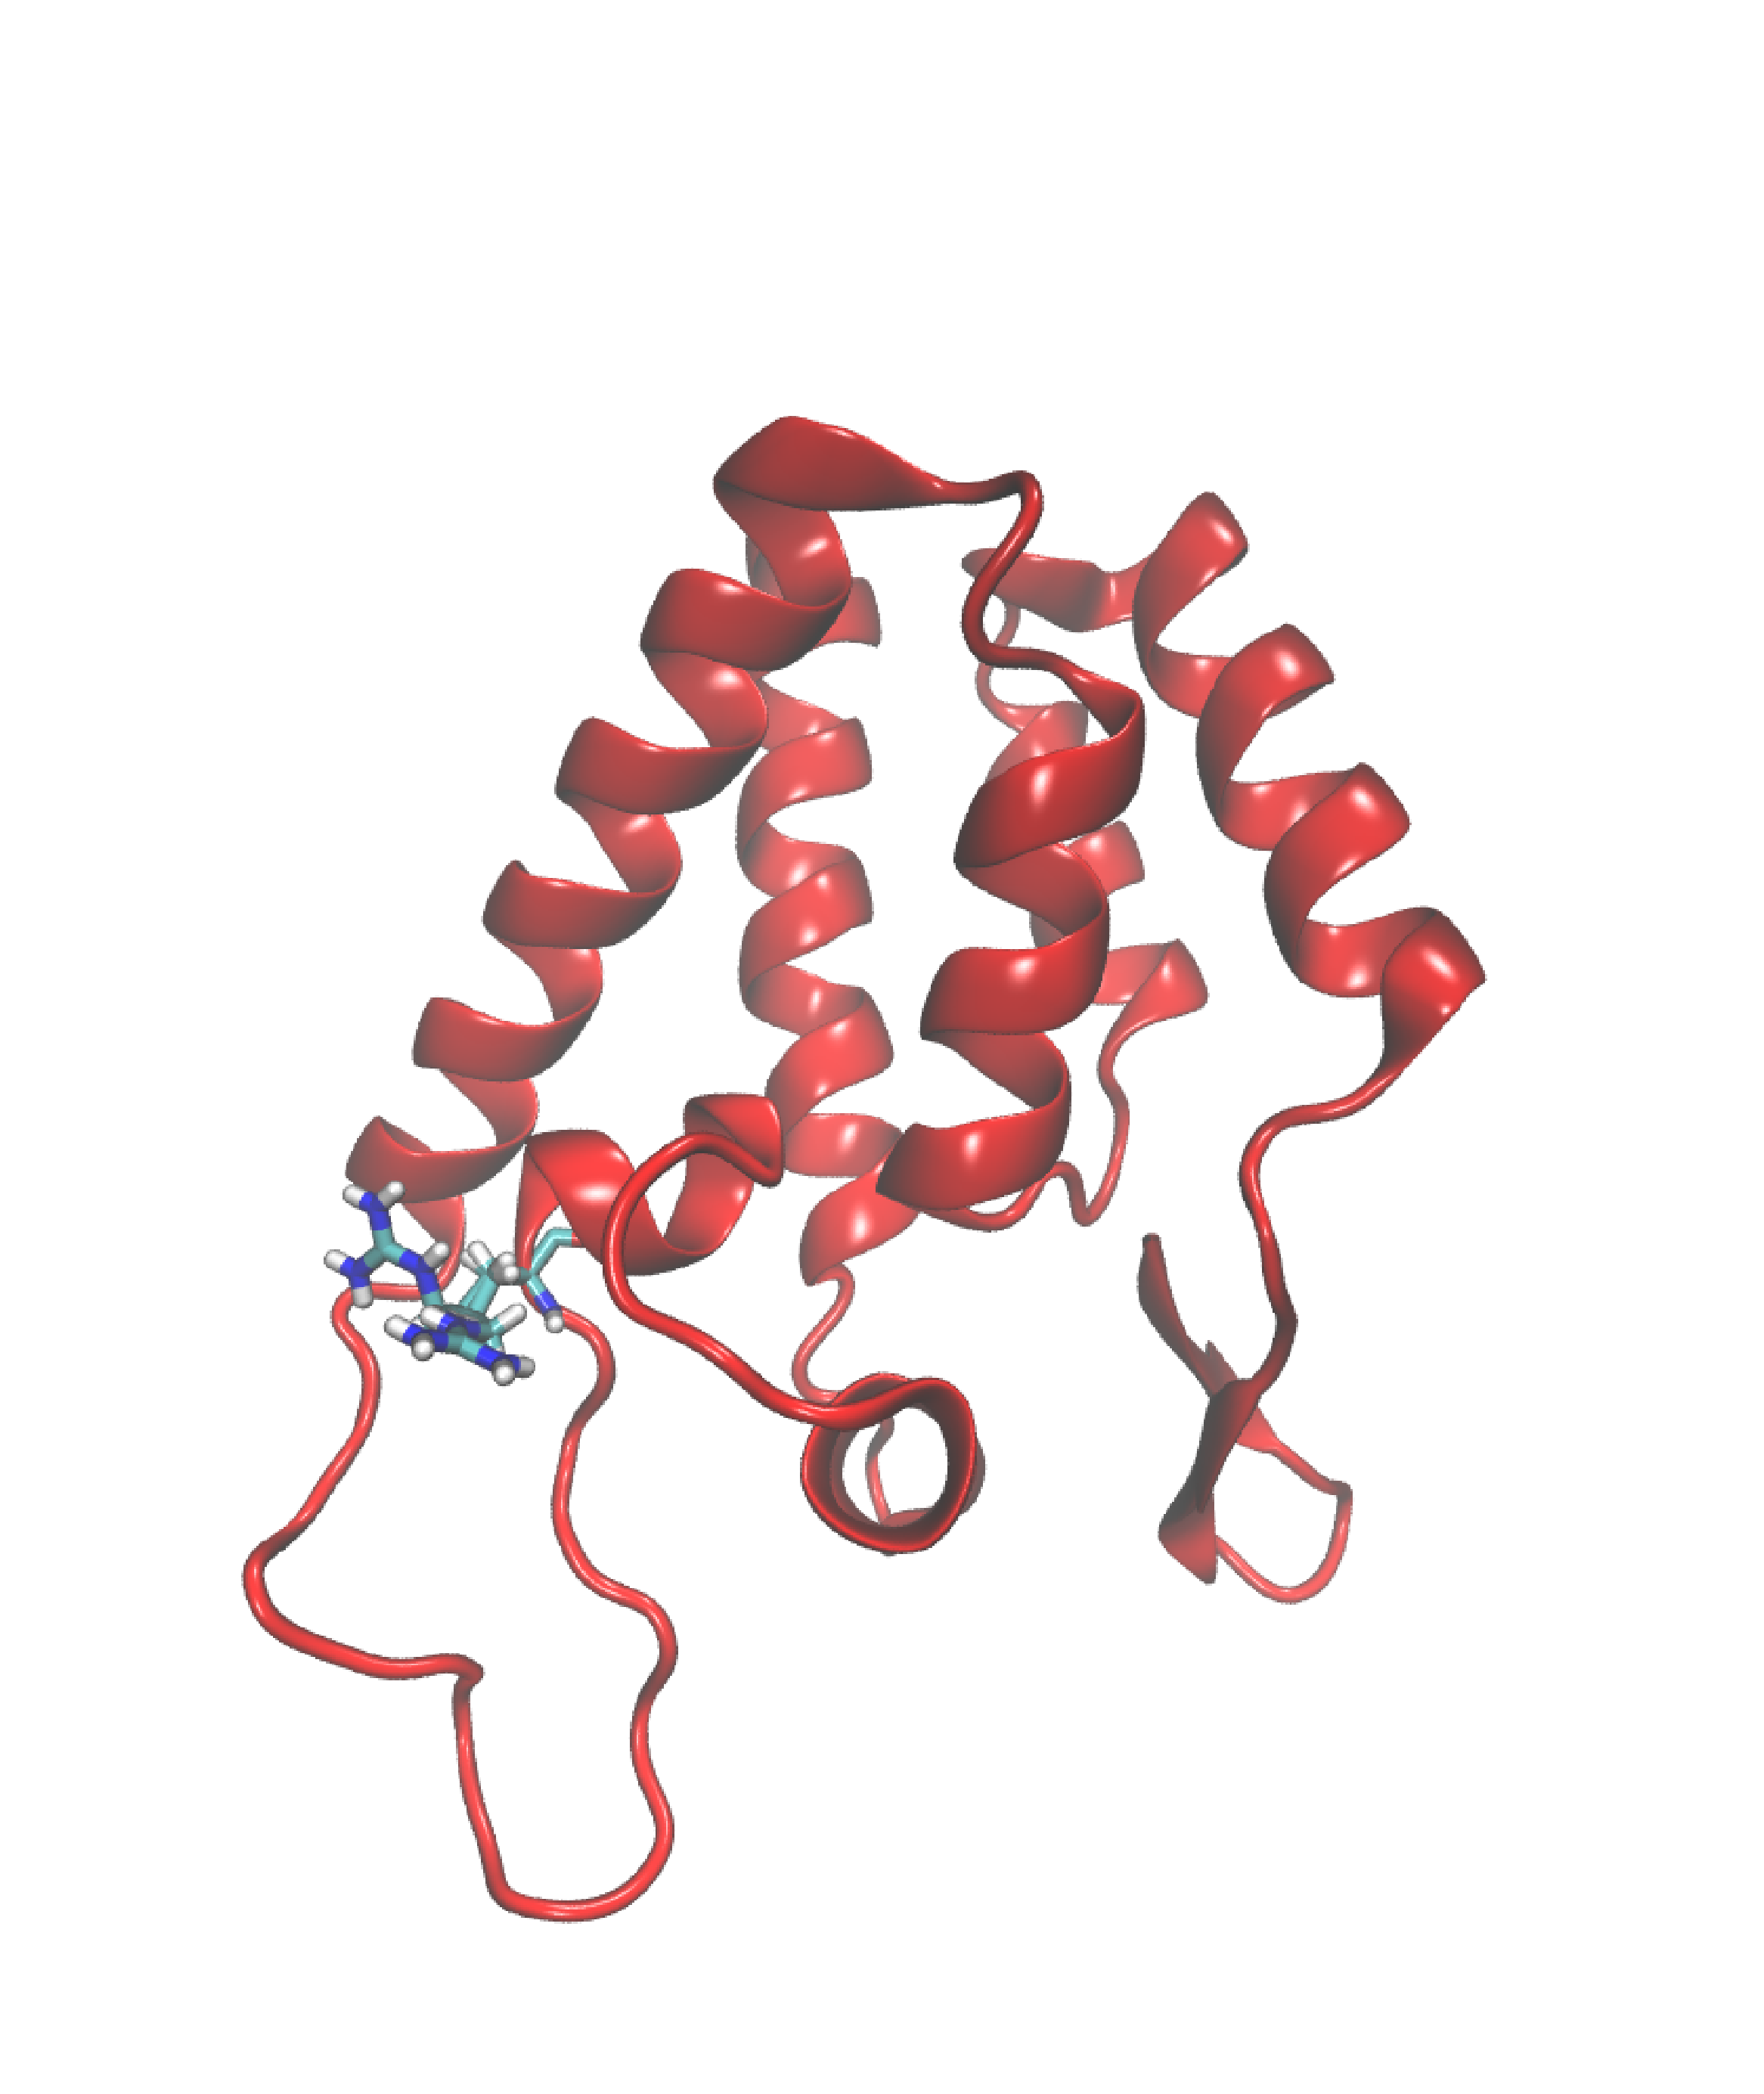  Protein-ligand system using VMD 